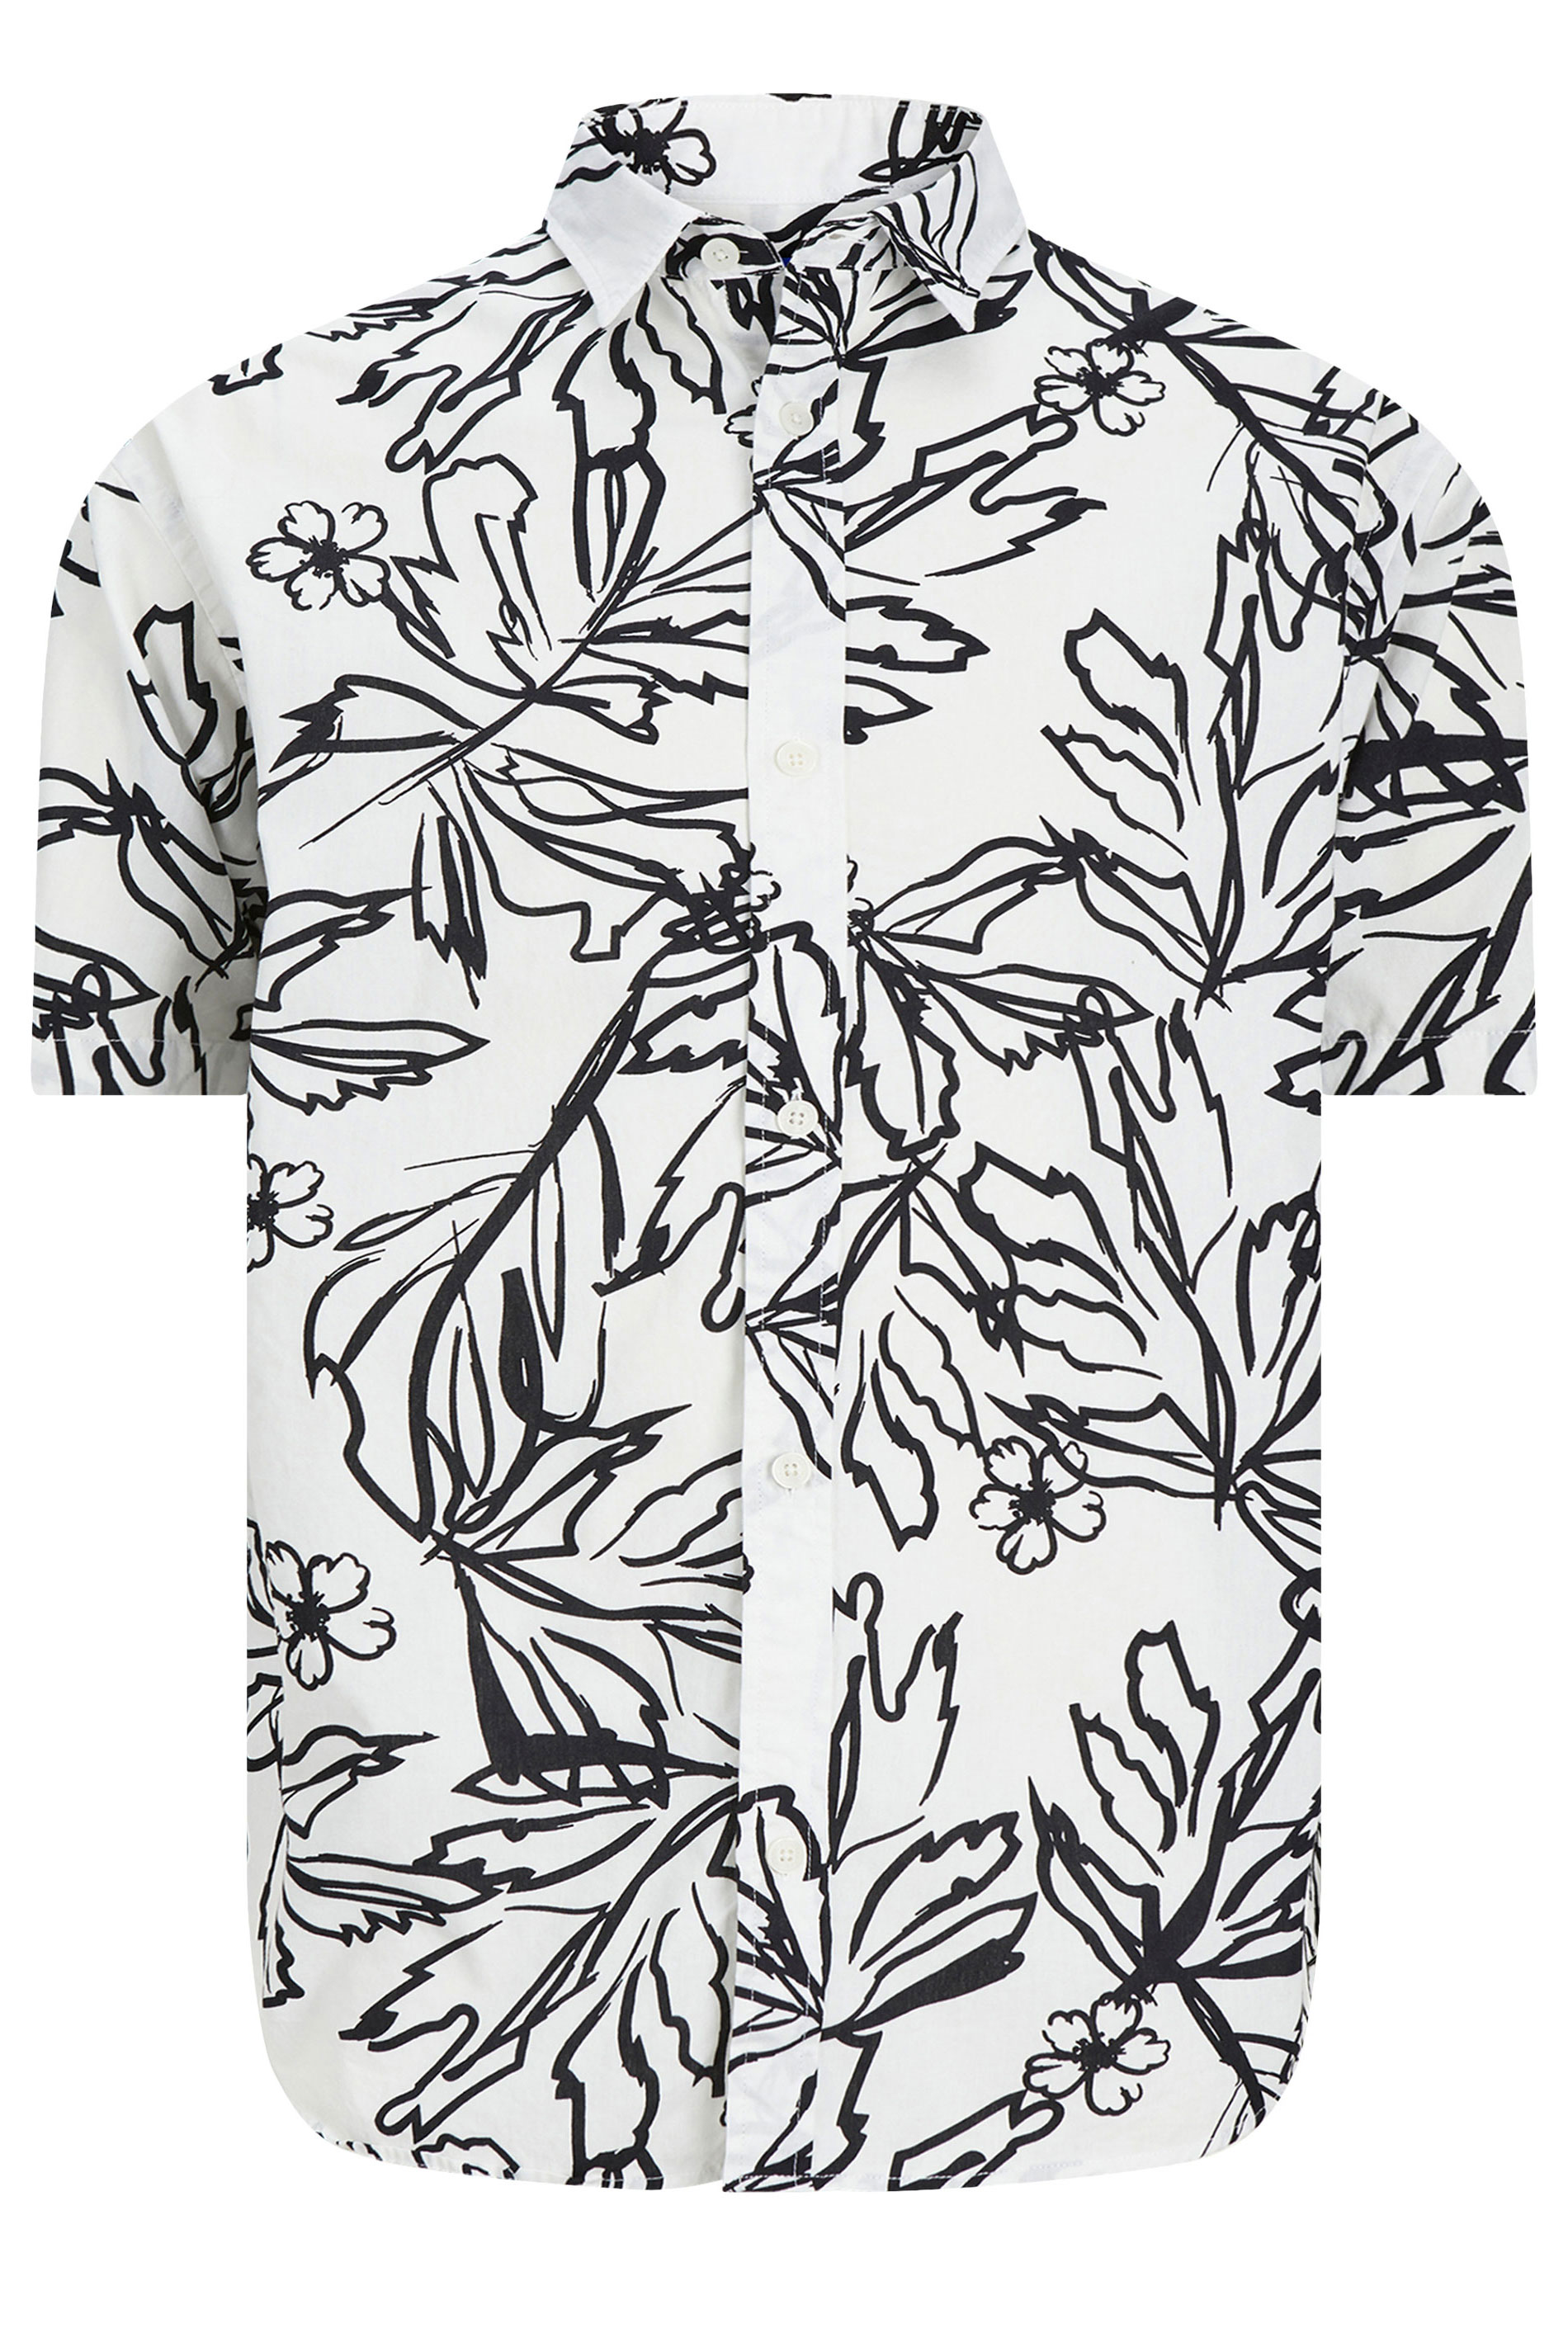 JACK & JONES Big & Tall White Tropical Printed Shirt | BadRhino 2